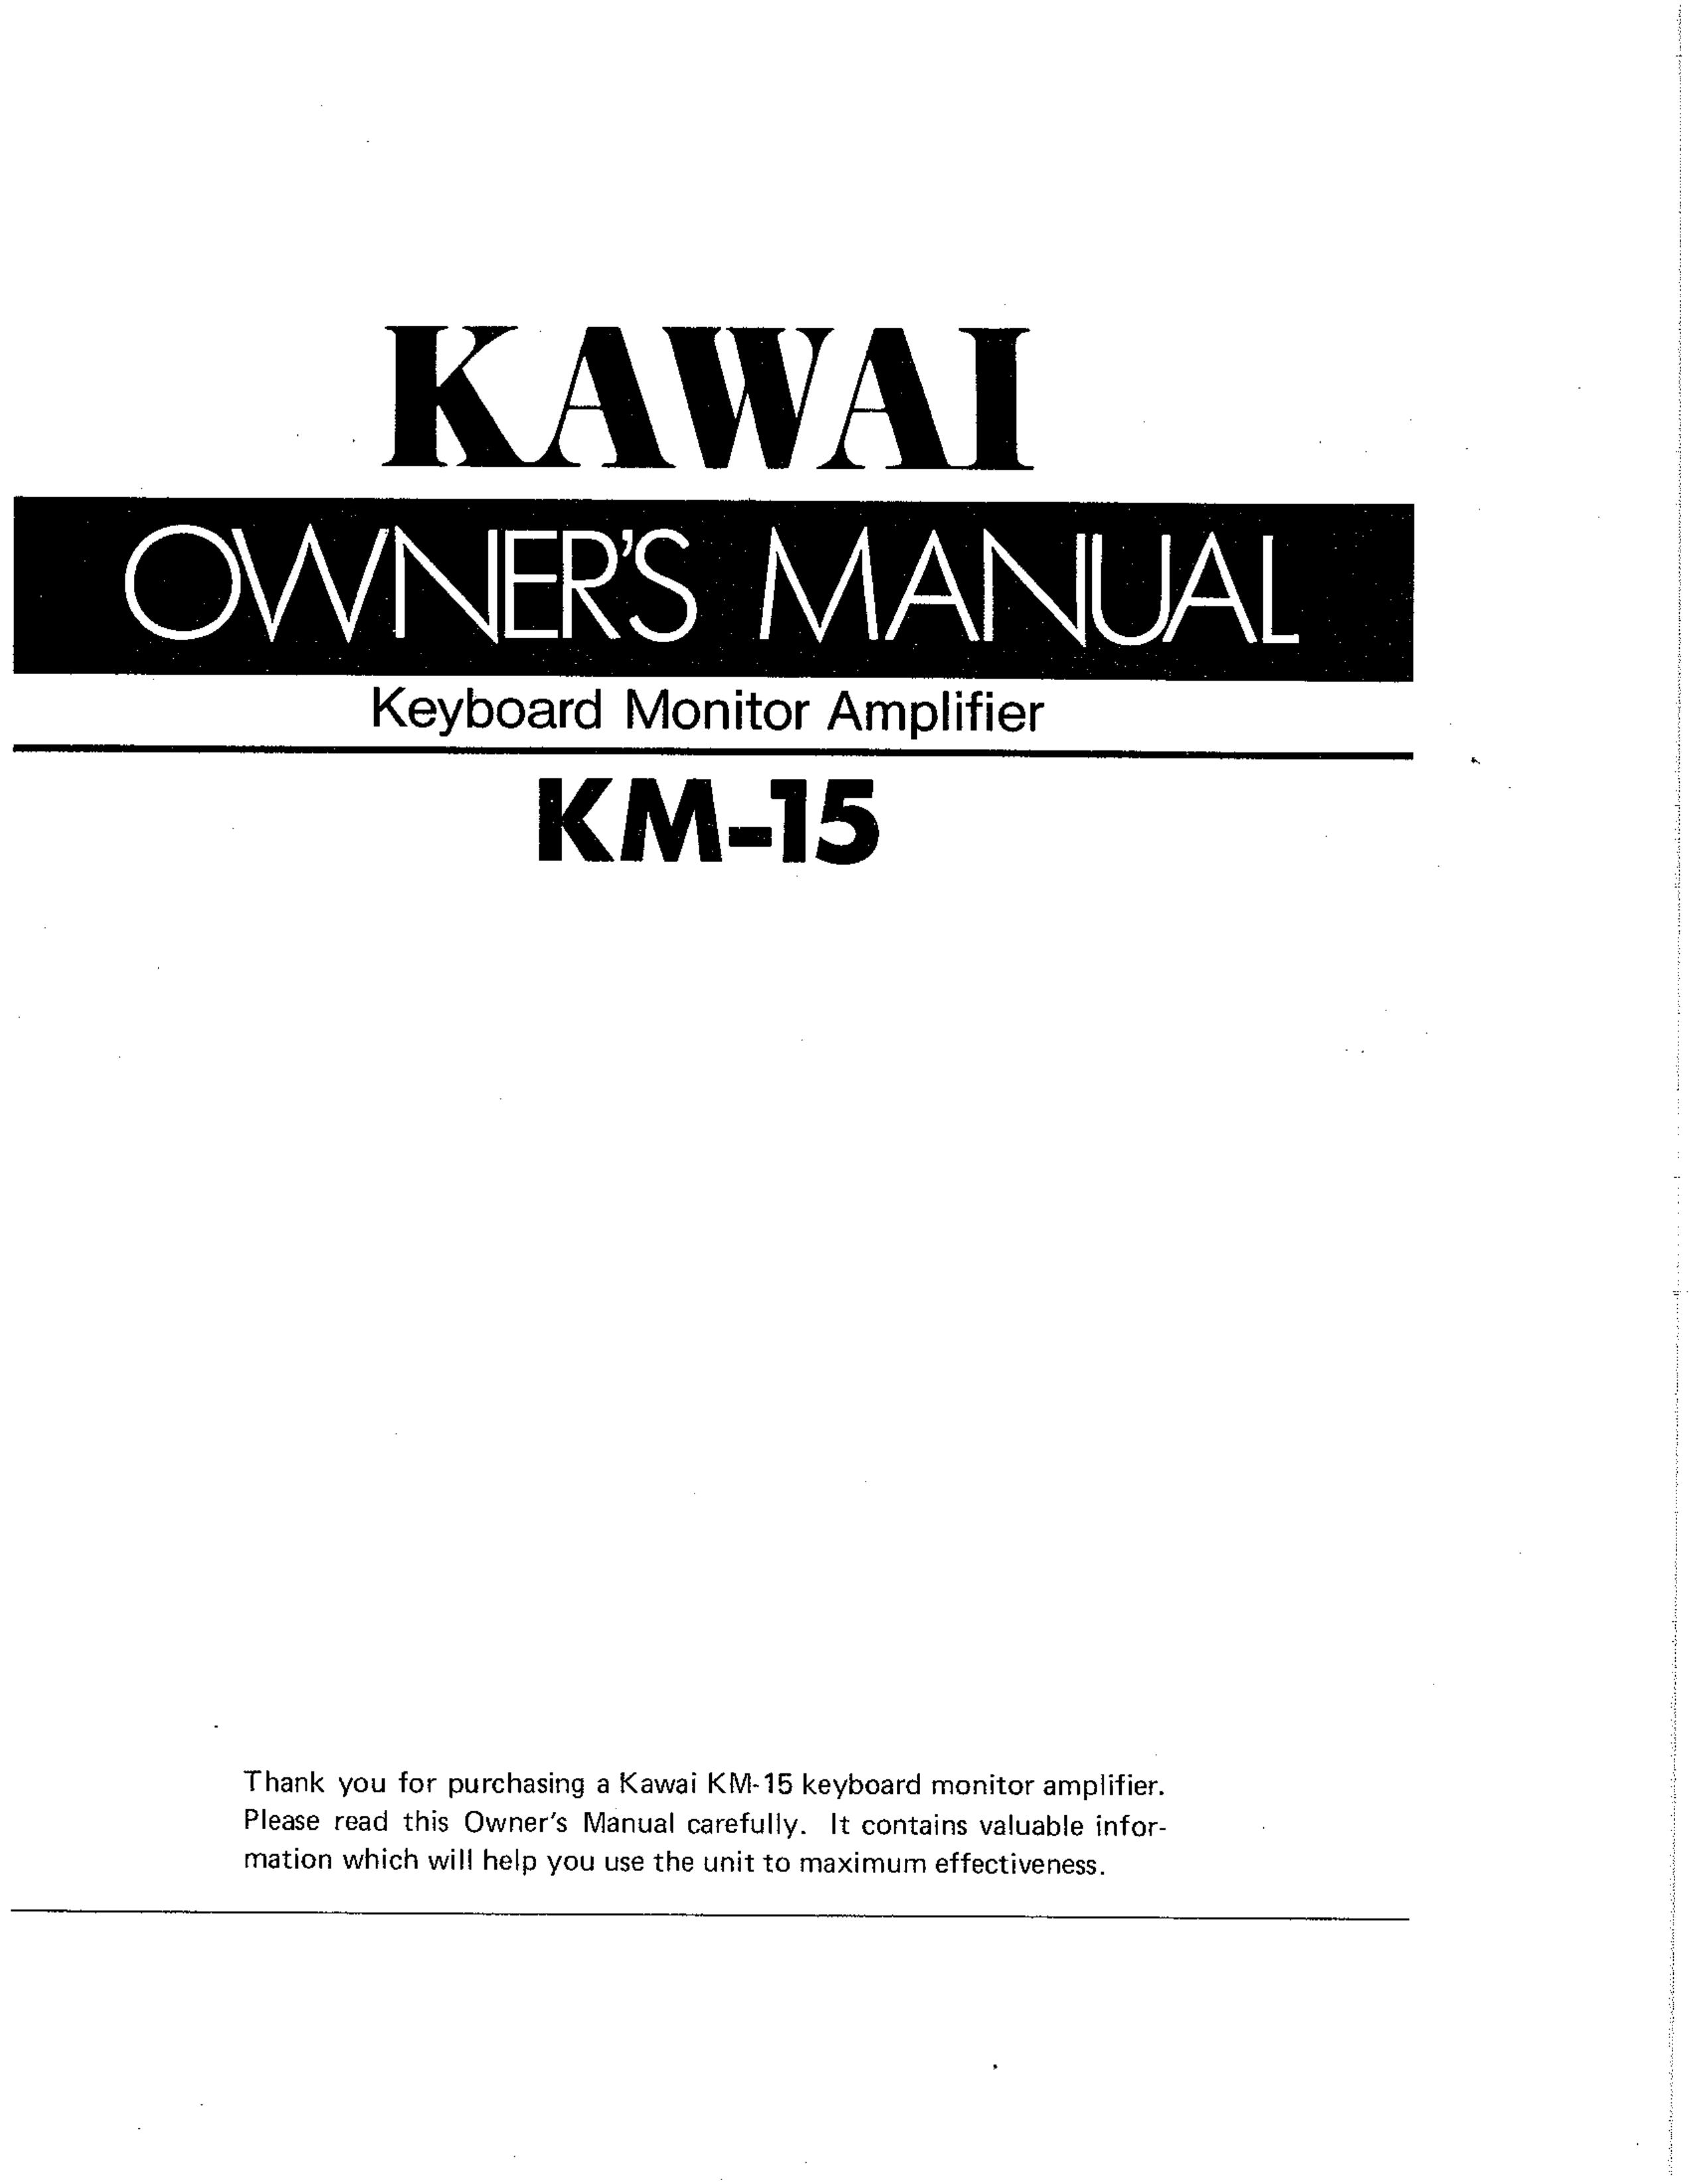 Kawai KM-15 Musical Instrument Amplifier User Manual